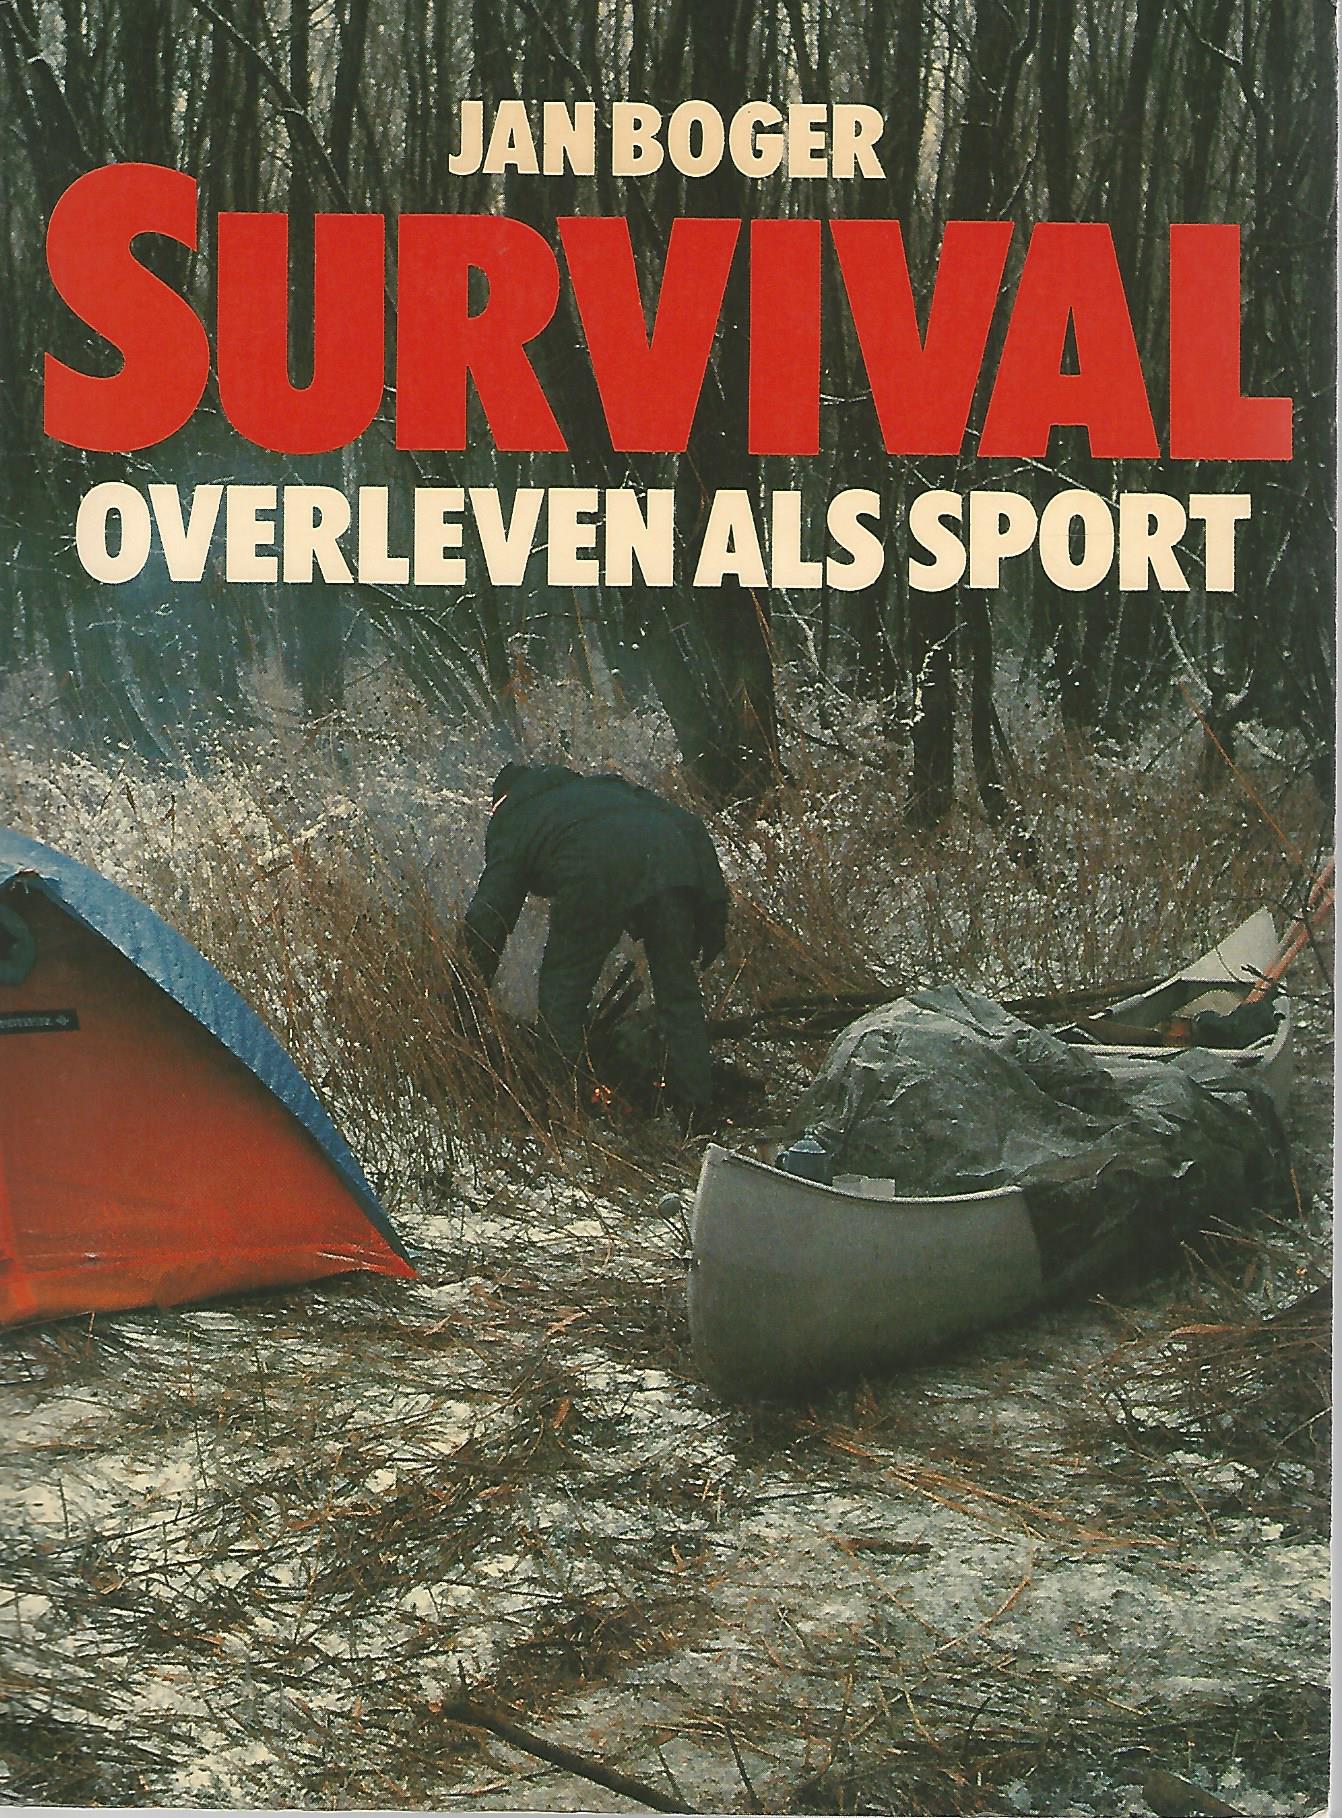 Boger, Jan - Survival -Overleven als sport